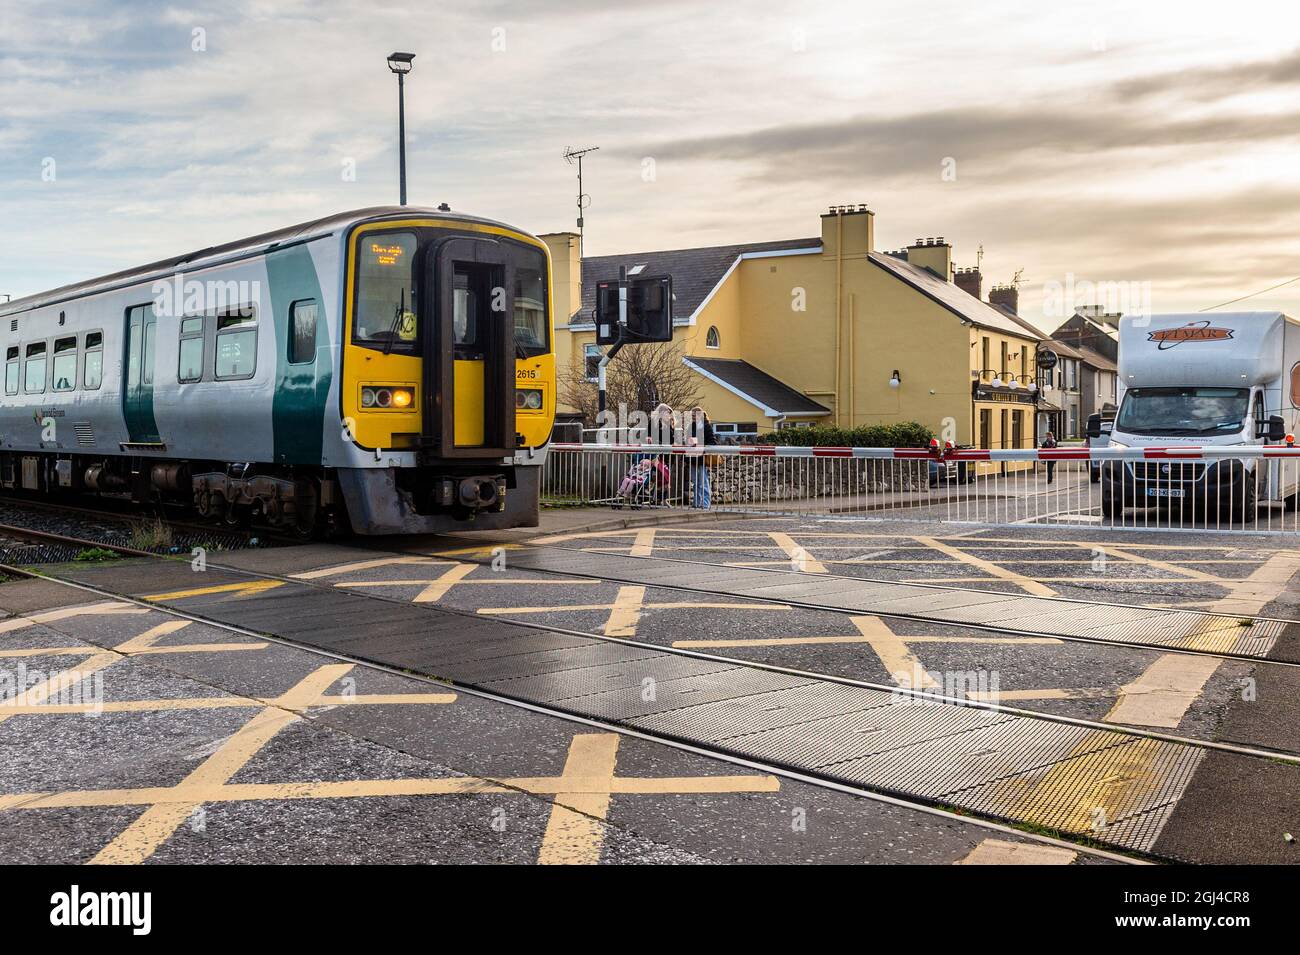 Iarnród Éireann passenger train passes a level crossing in Midleton, East Cork, Ireland. Stock Photo